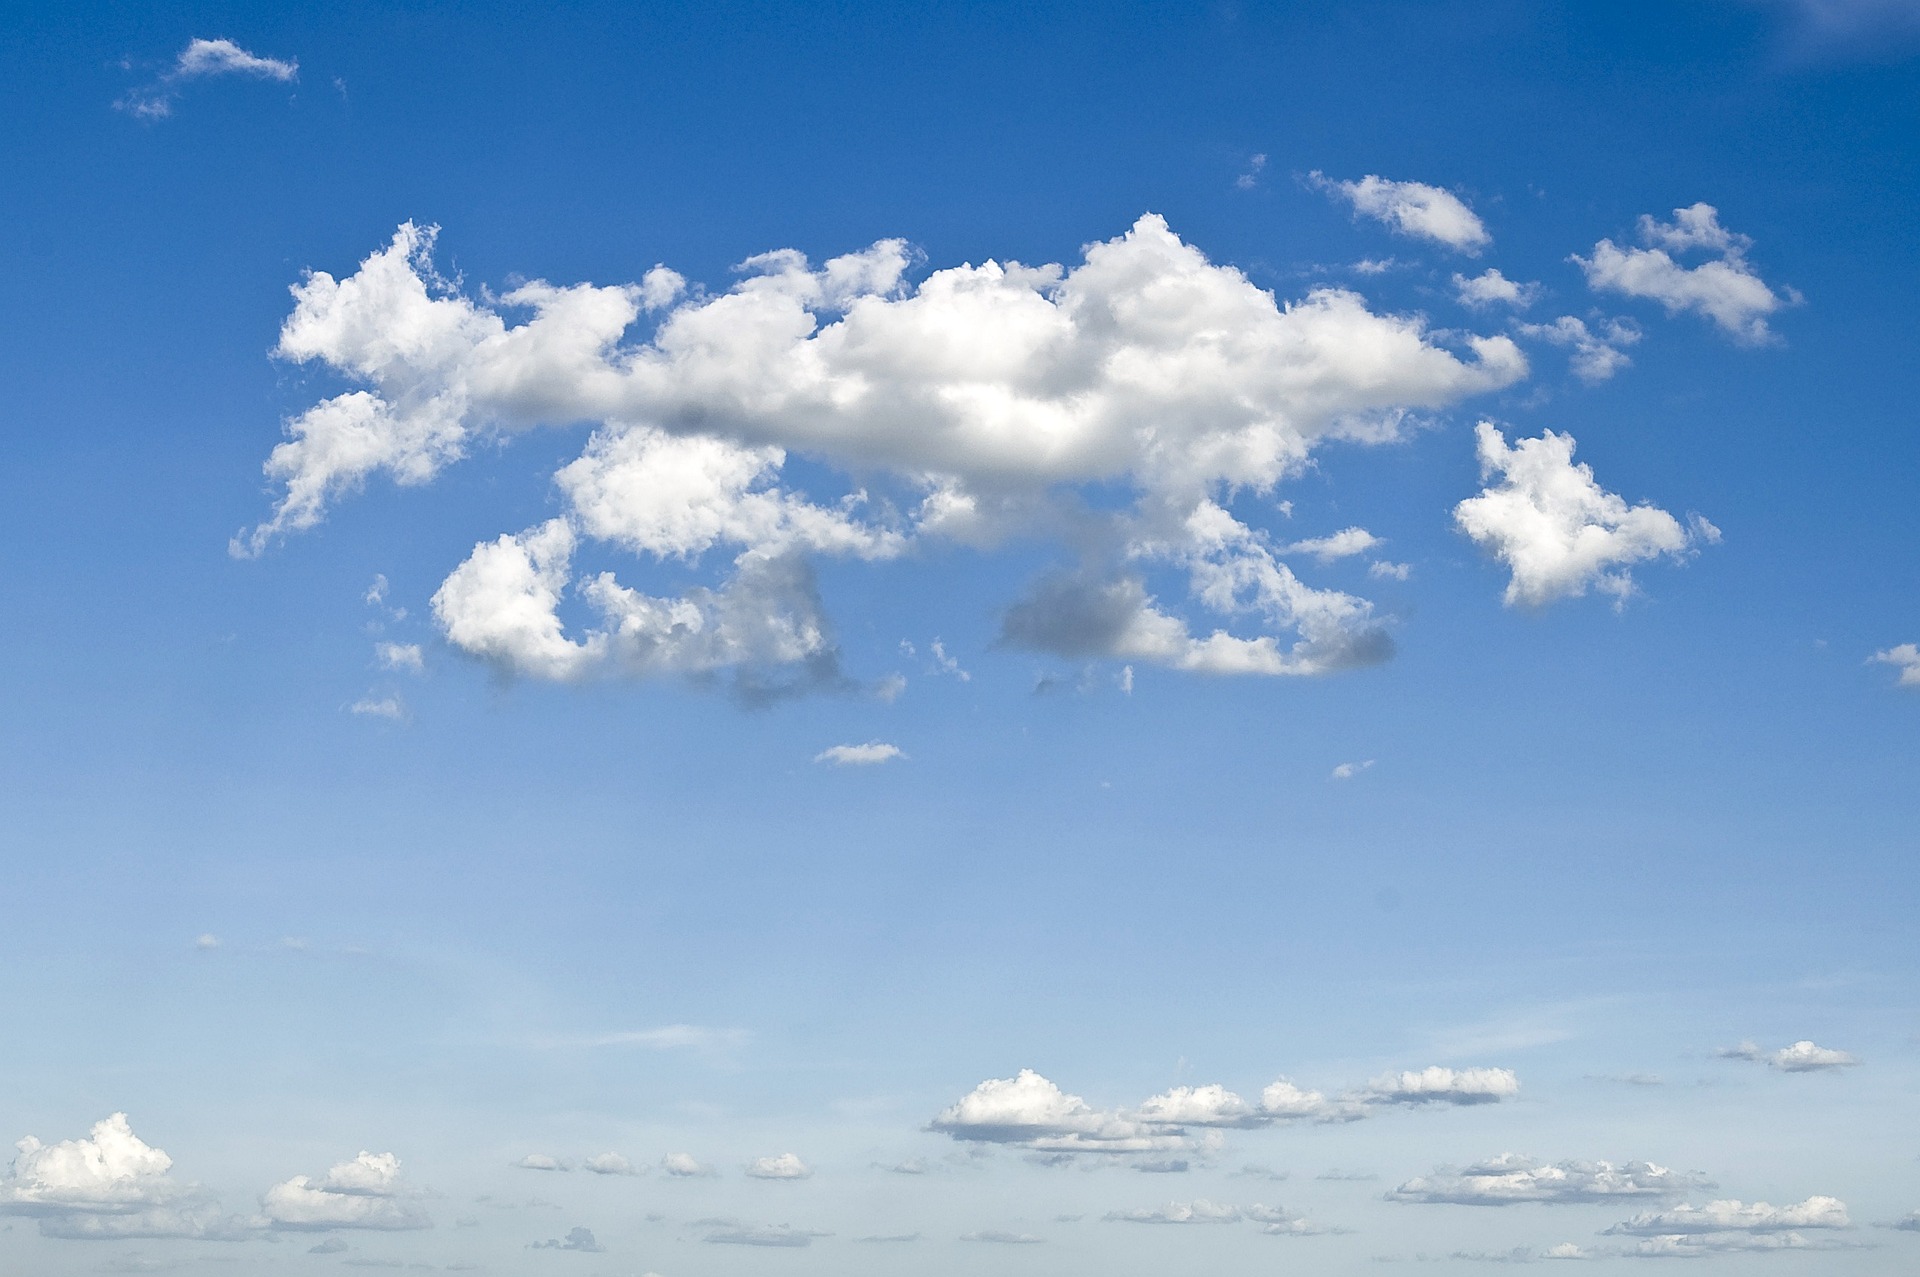 Meteo Ragusa: oggi martedì 31 Ottobre poco nuvoloso per velature.